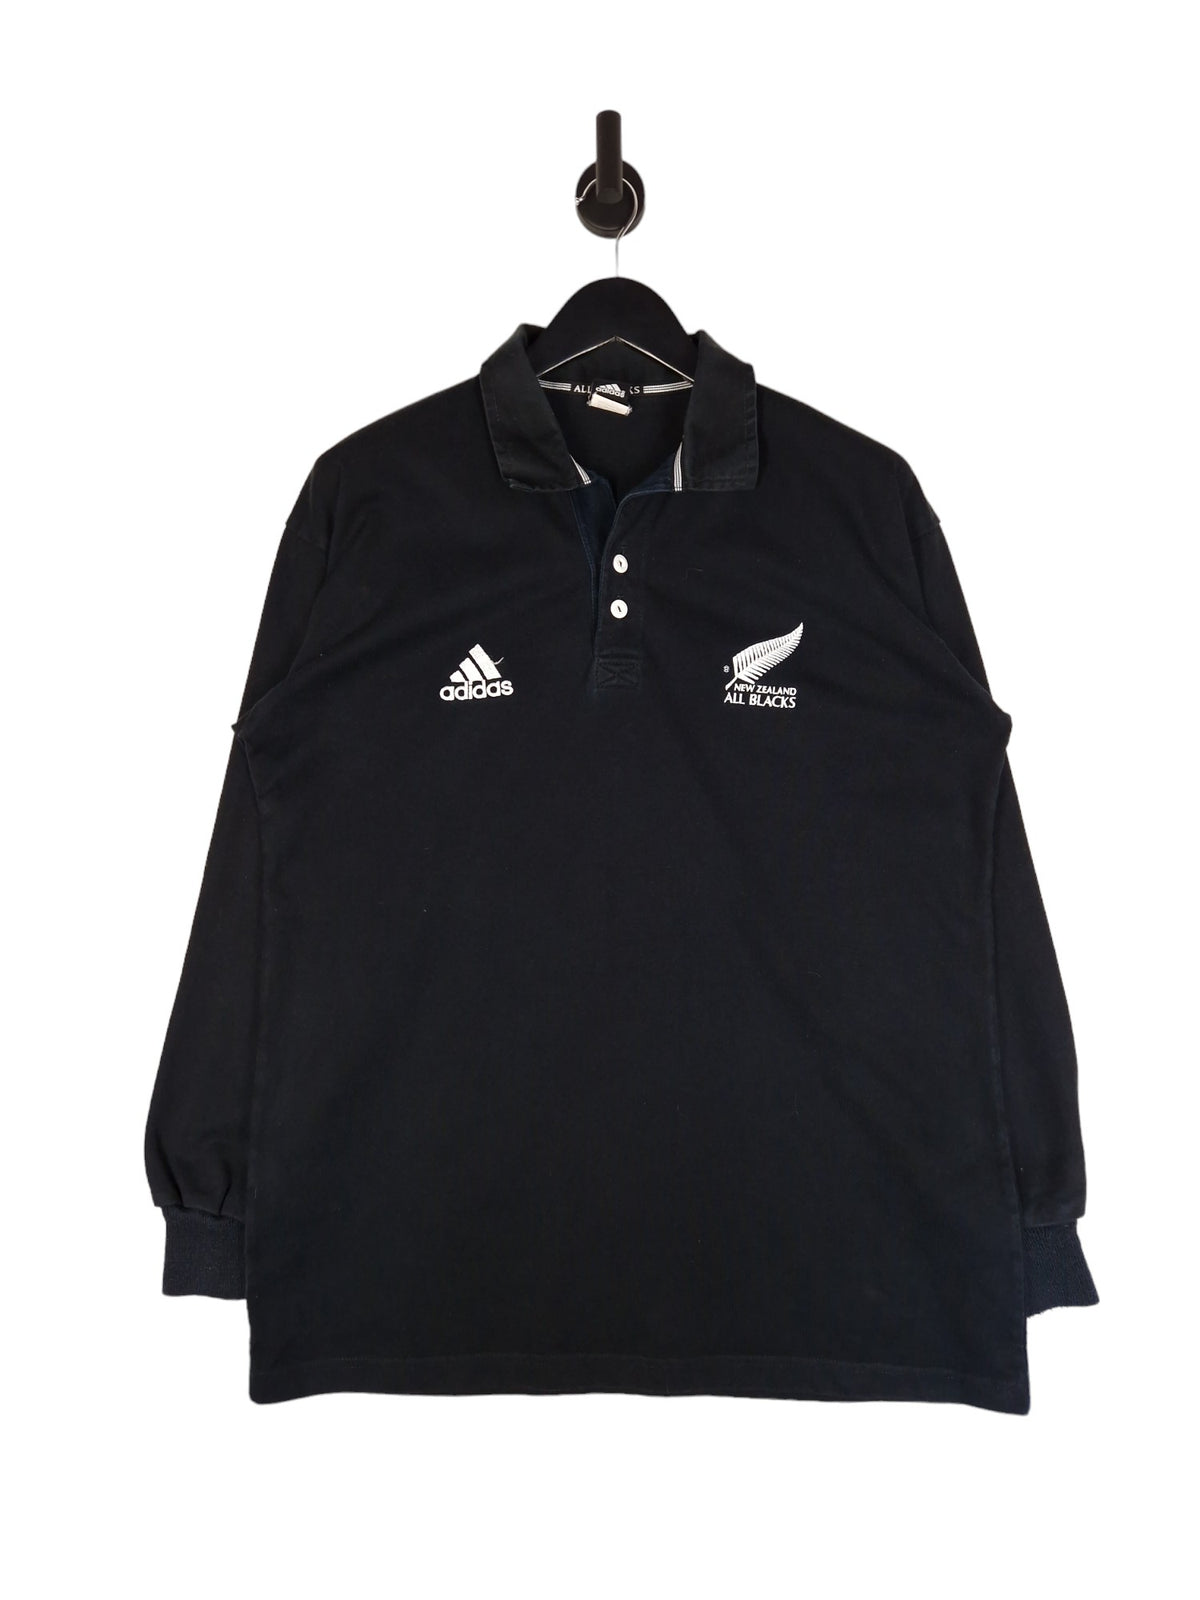 Adidas 2002/03 New Zealand All Blacks Rugby Jersey - Size XL